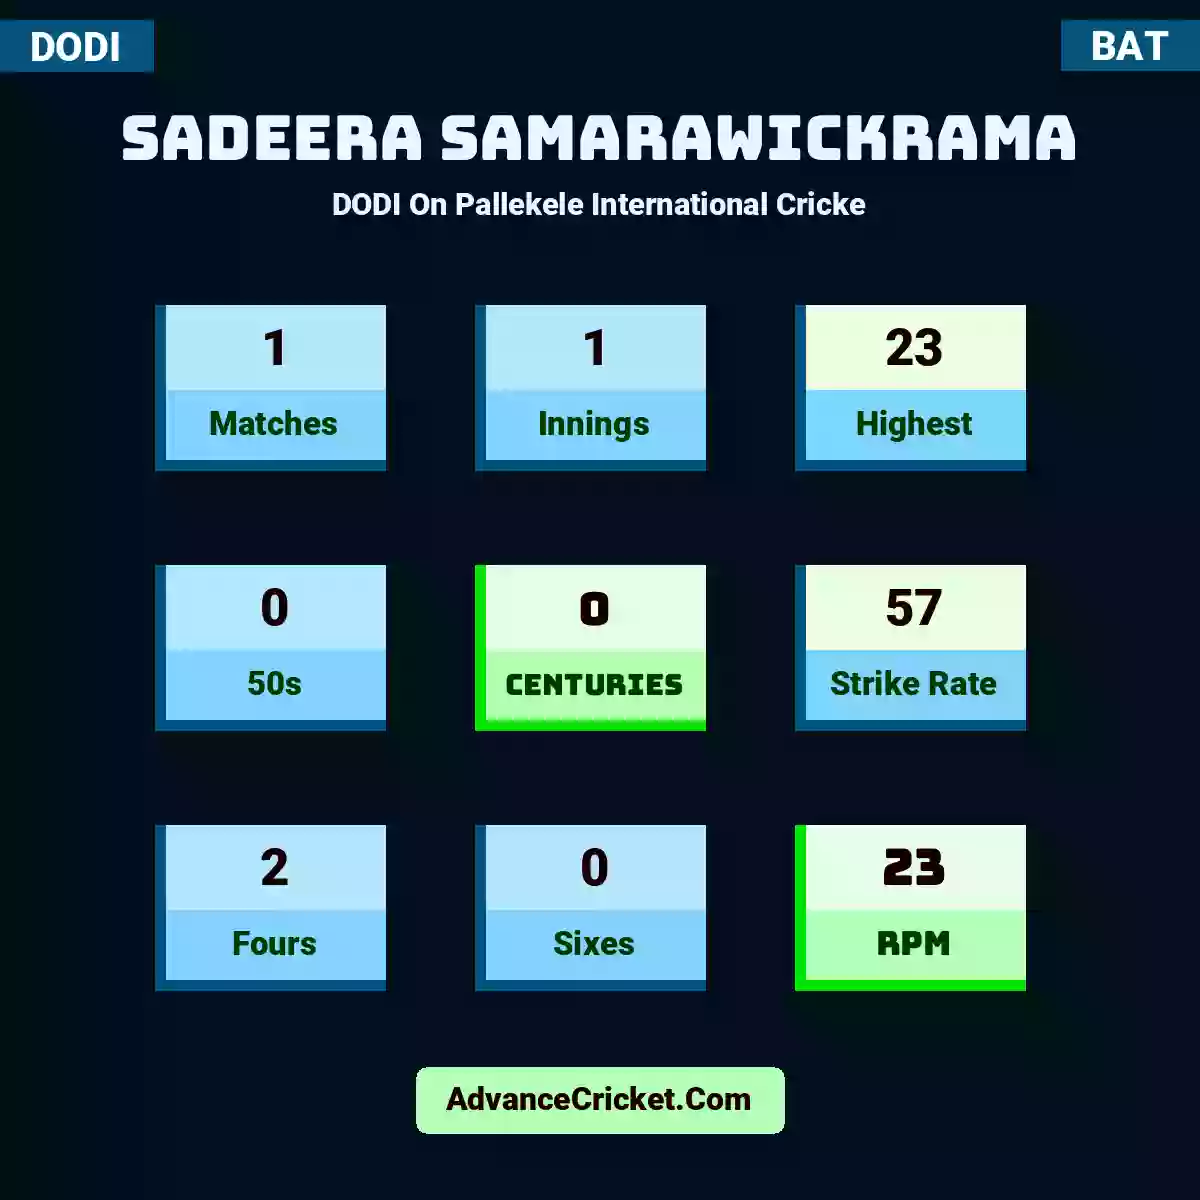 Sadeera Samarawickrama DODI  On Pallekele International Cricke, Sadeera Samarawickrama played 1 matches, scored 23 runs as highest, 0 half-centuries, and 0 centuries, with a strike rate of 57. S.Samarawickrama hit 2 fours and 0 sixes, with an RPM of 23.